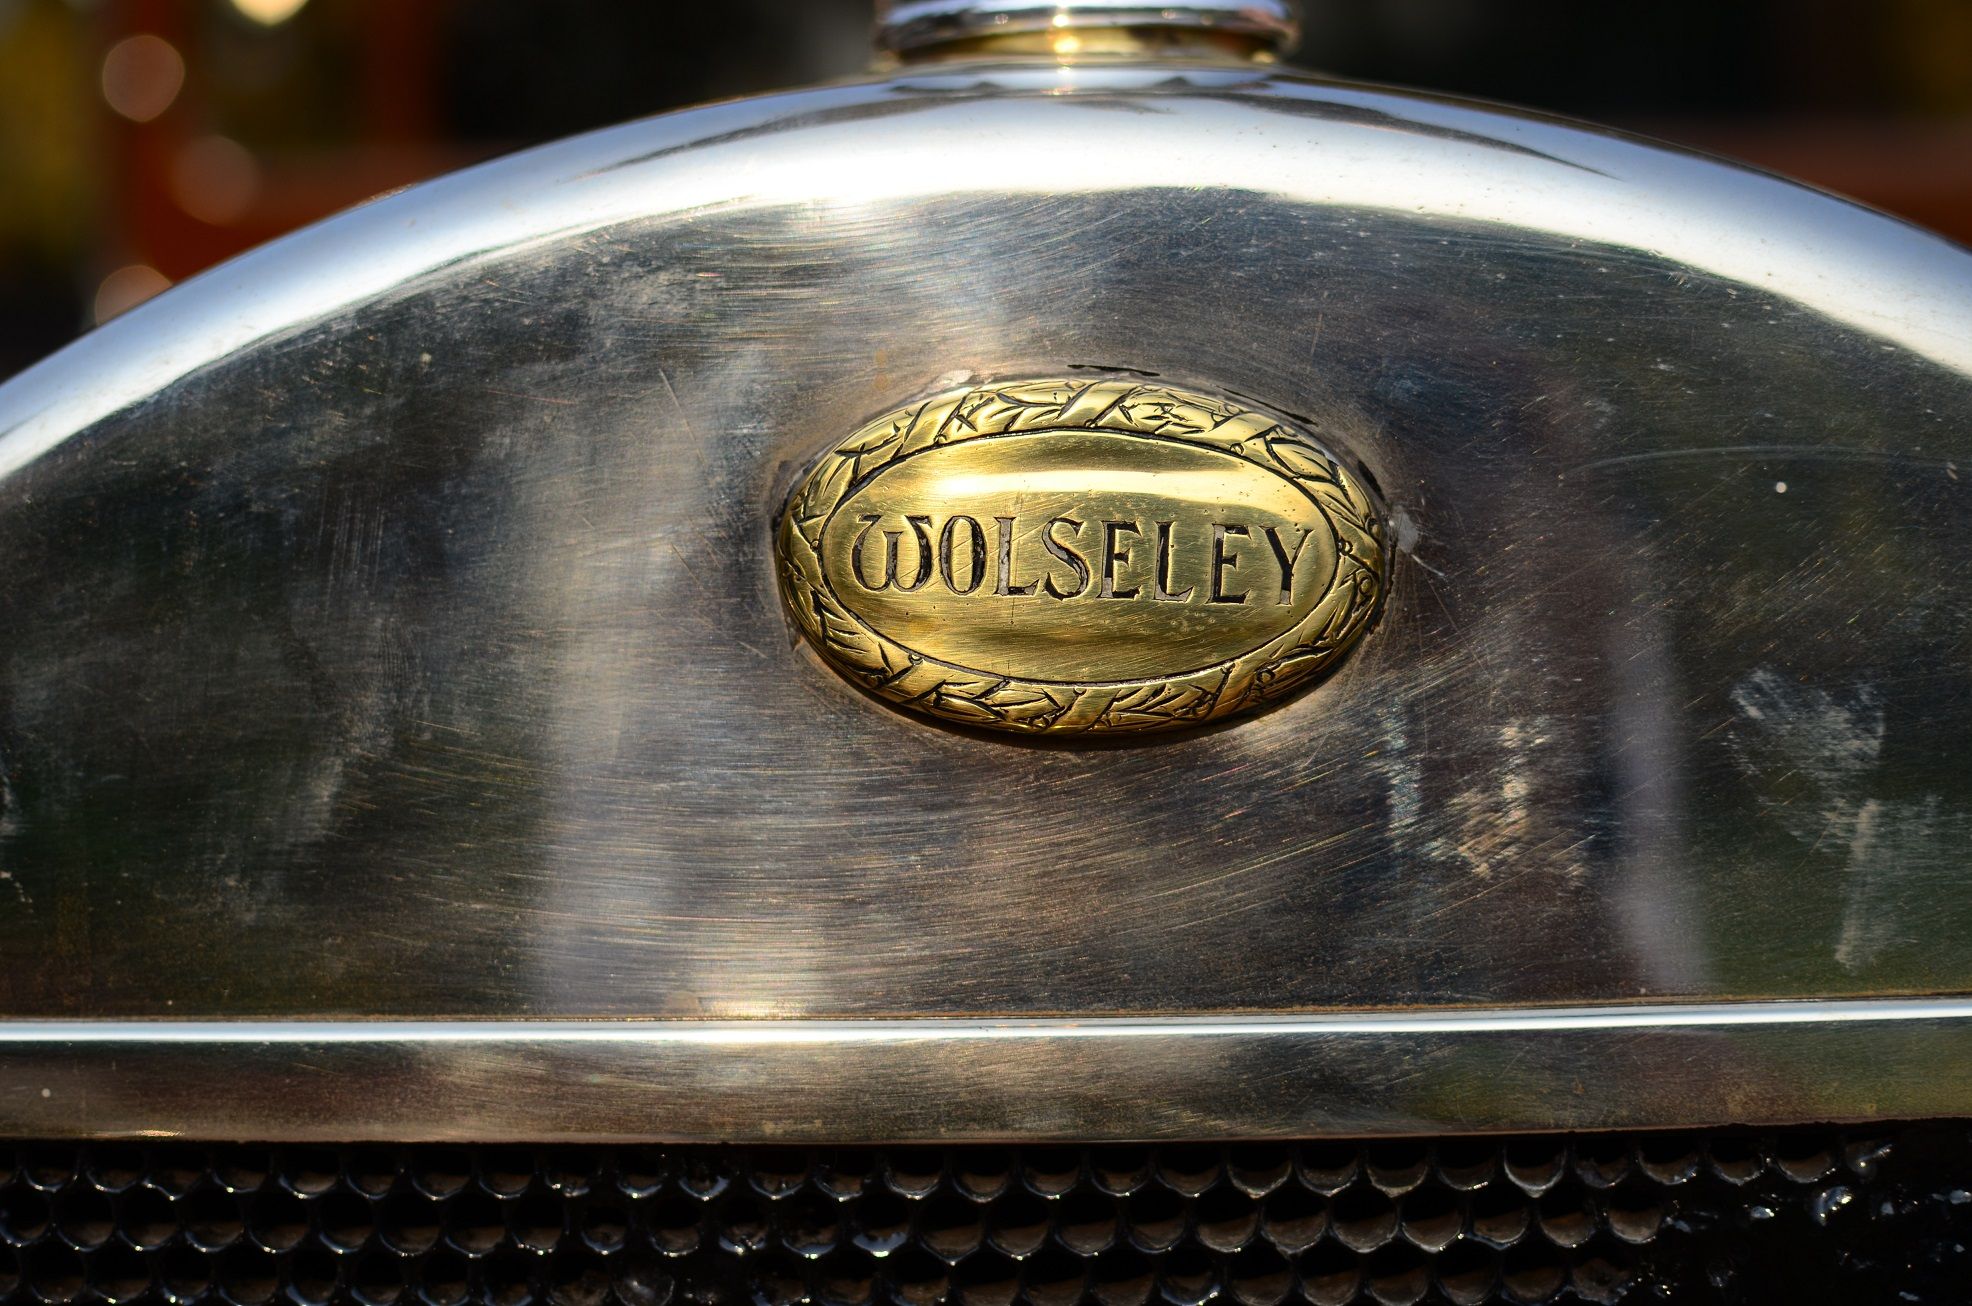 1914 Wolseley 30/40 Landaulet Shrivardhan Kanoria won Best of Show 2017 Cartier concours d’elègance Hyderabad Wolseley car models